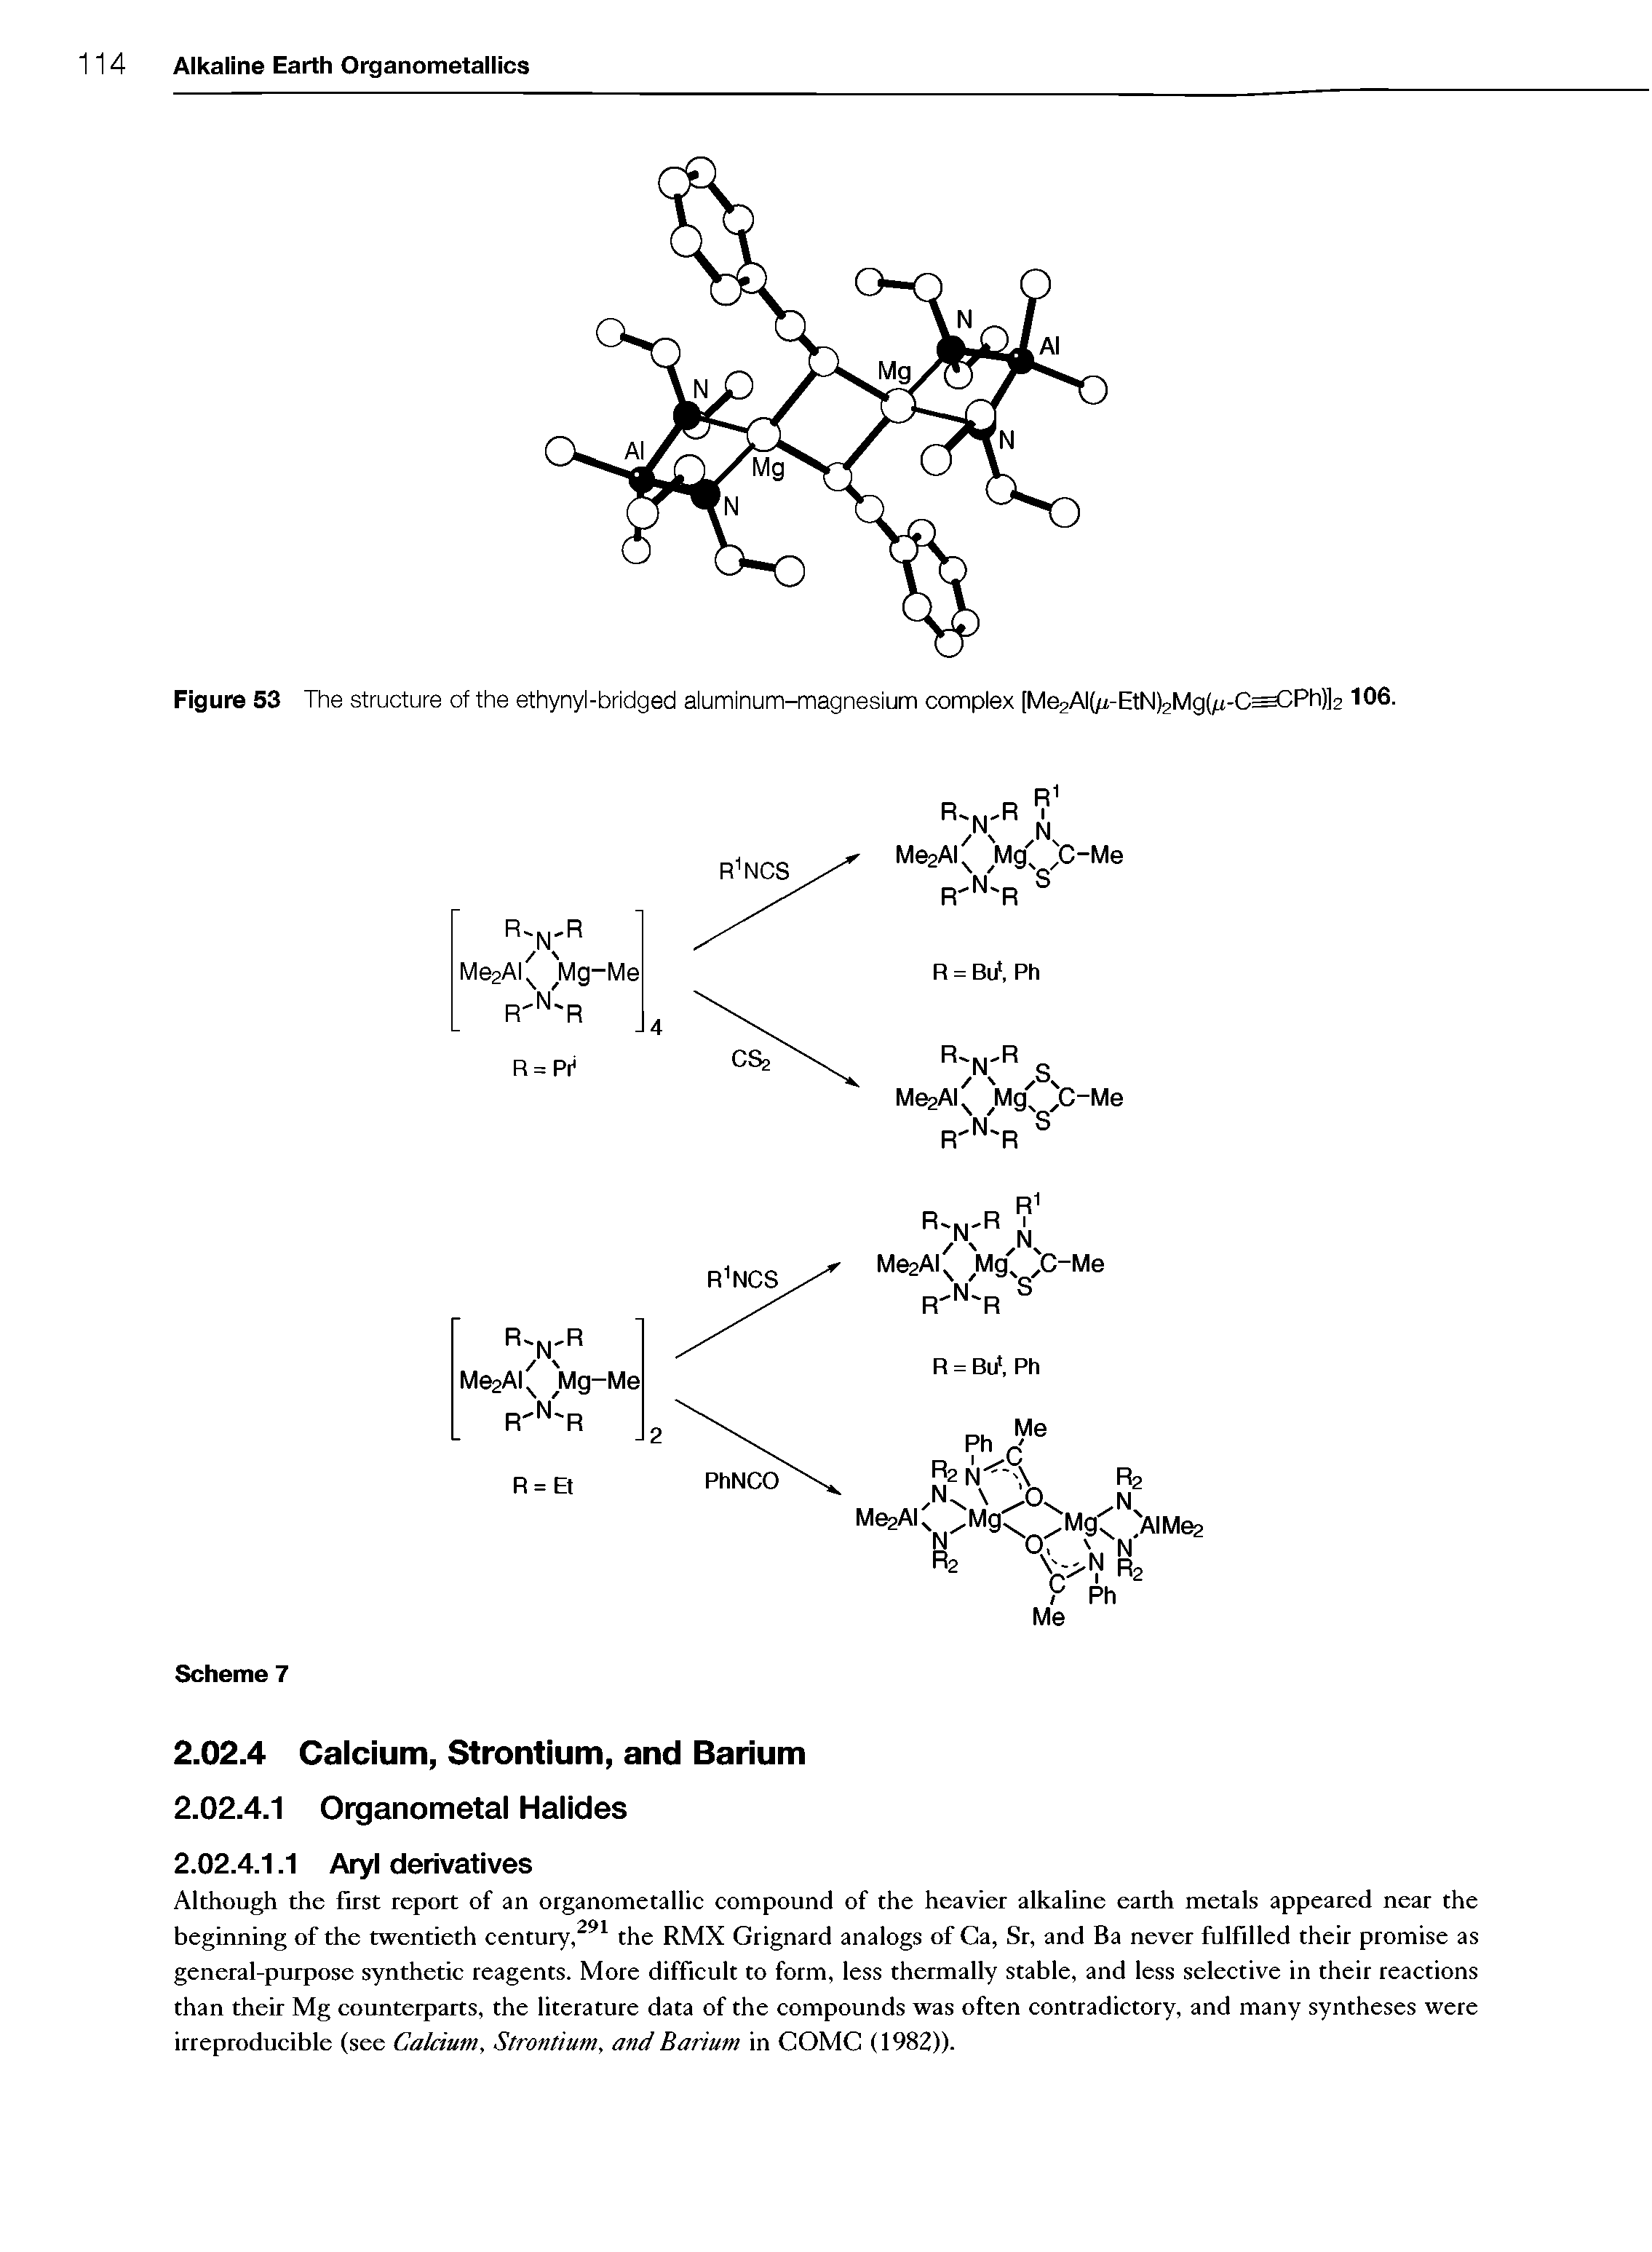 Figure 53 The structure of the ethynyl-bridged aluminum-magnesium complex [Me2AI(/i-EtN)2Mg(/j-Cs=CPh)]2 106.